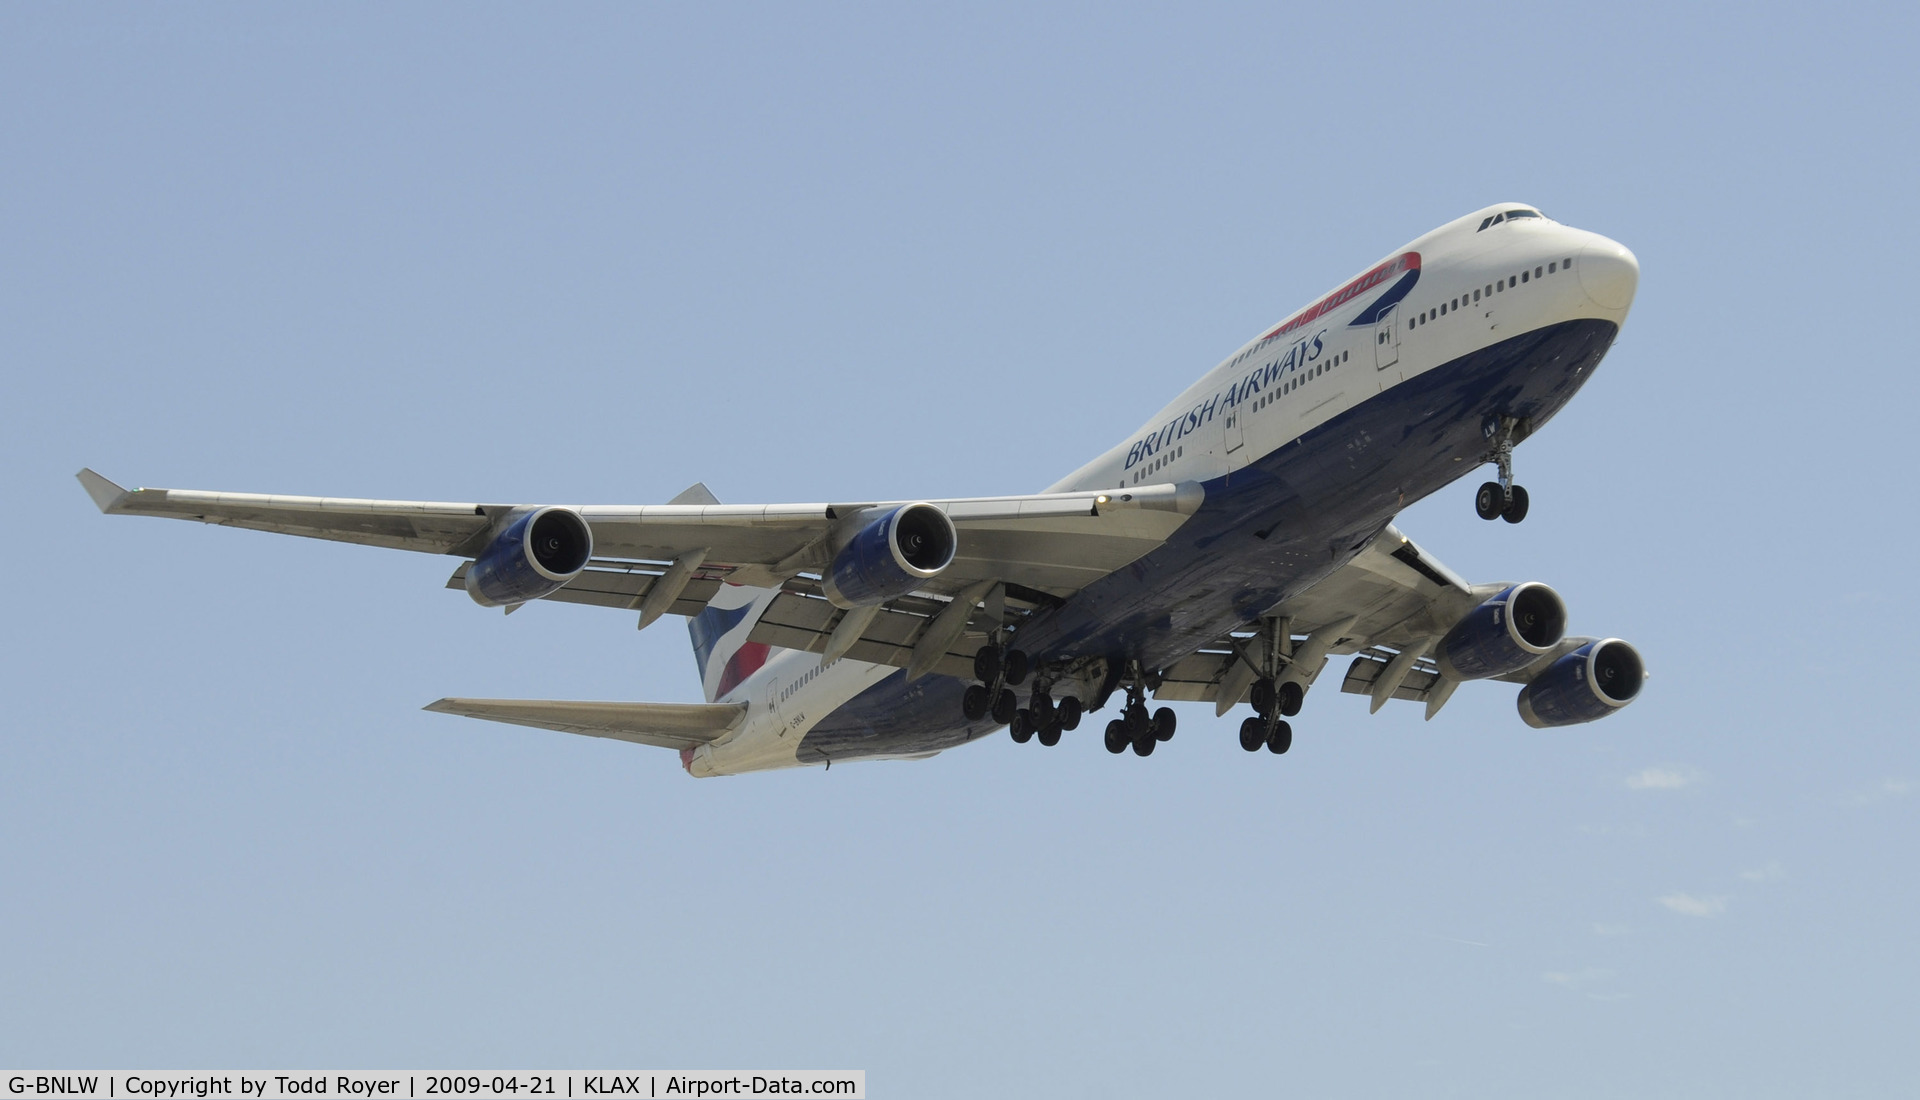 G-BNLW, 1992 Boeing 747-436 C/N 25432, Landing 24R at LAX